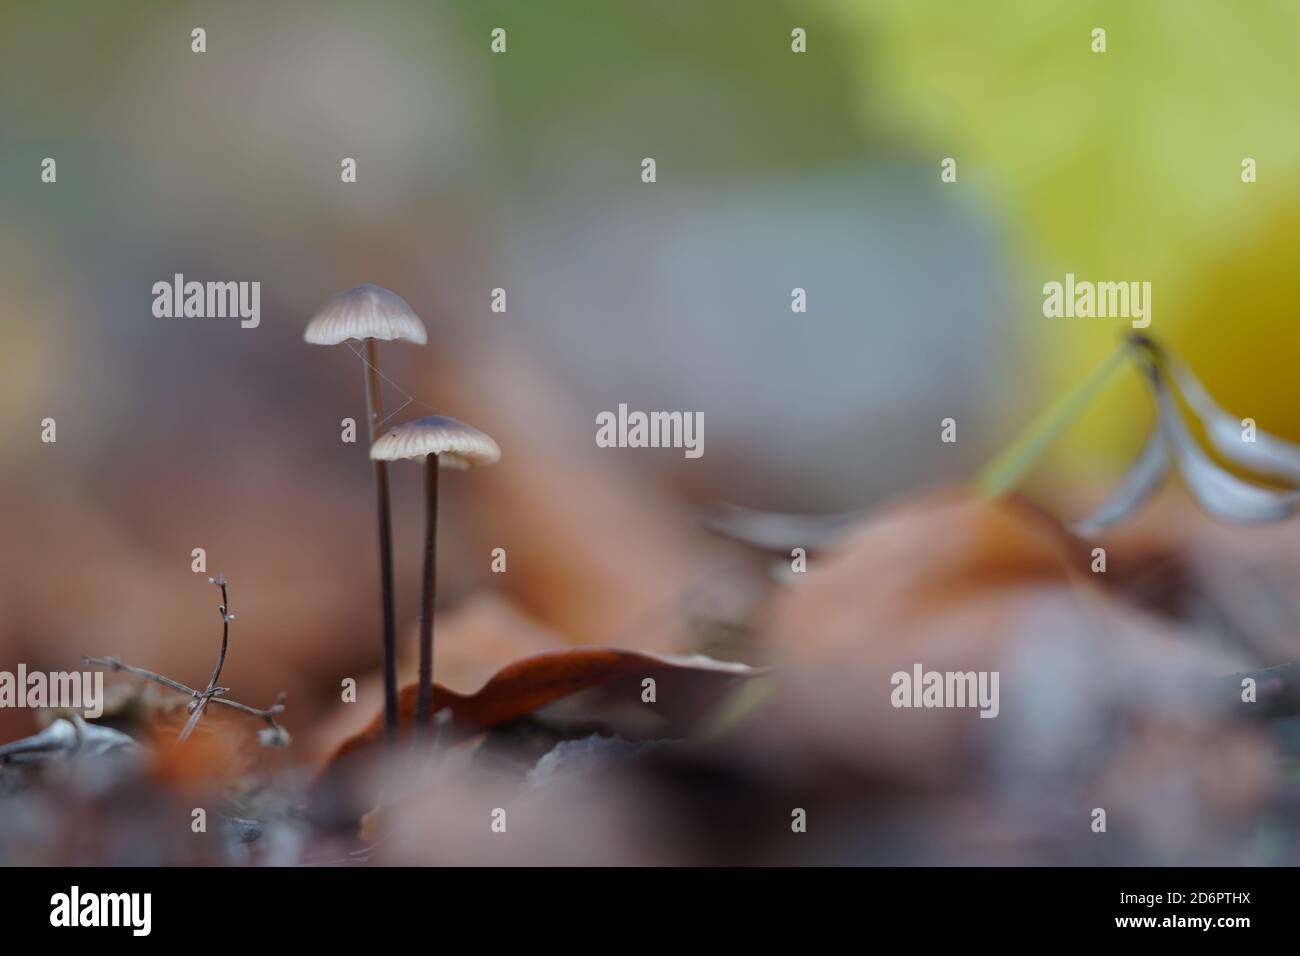 two mushrooms in the leaves, Marasmius Stock Photo